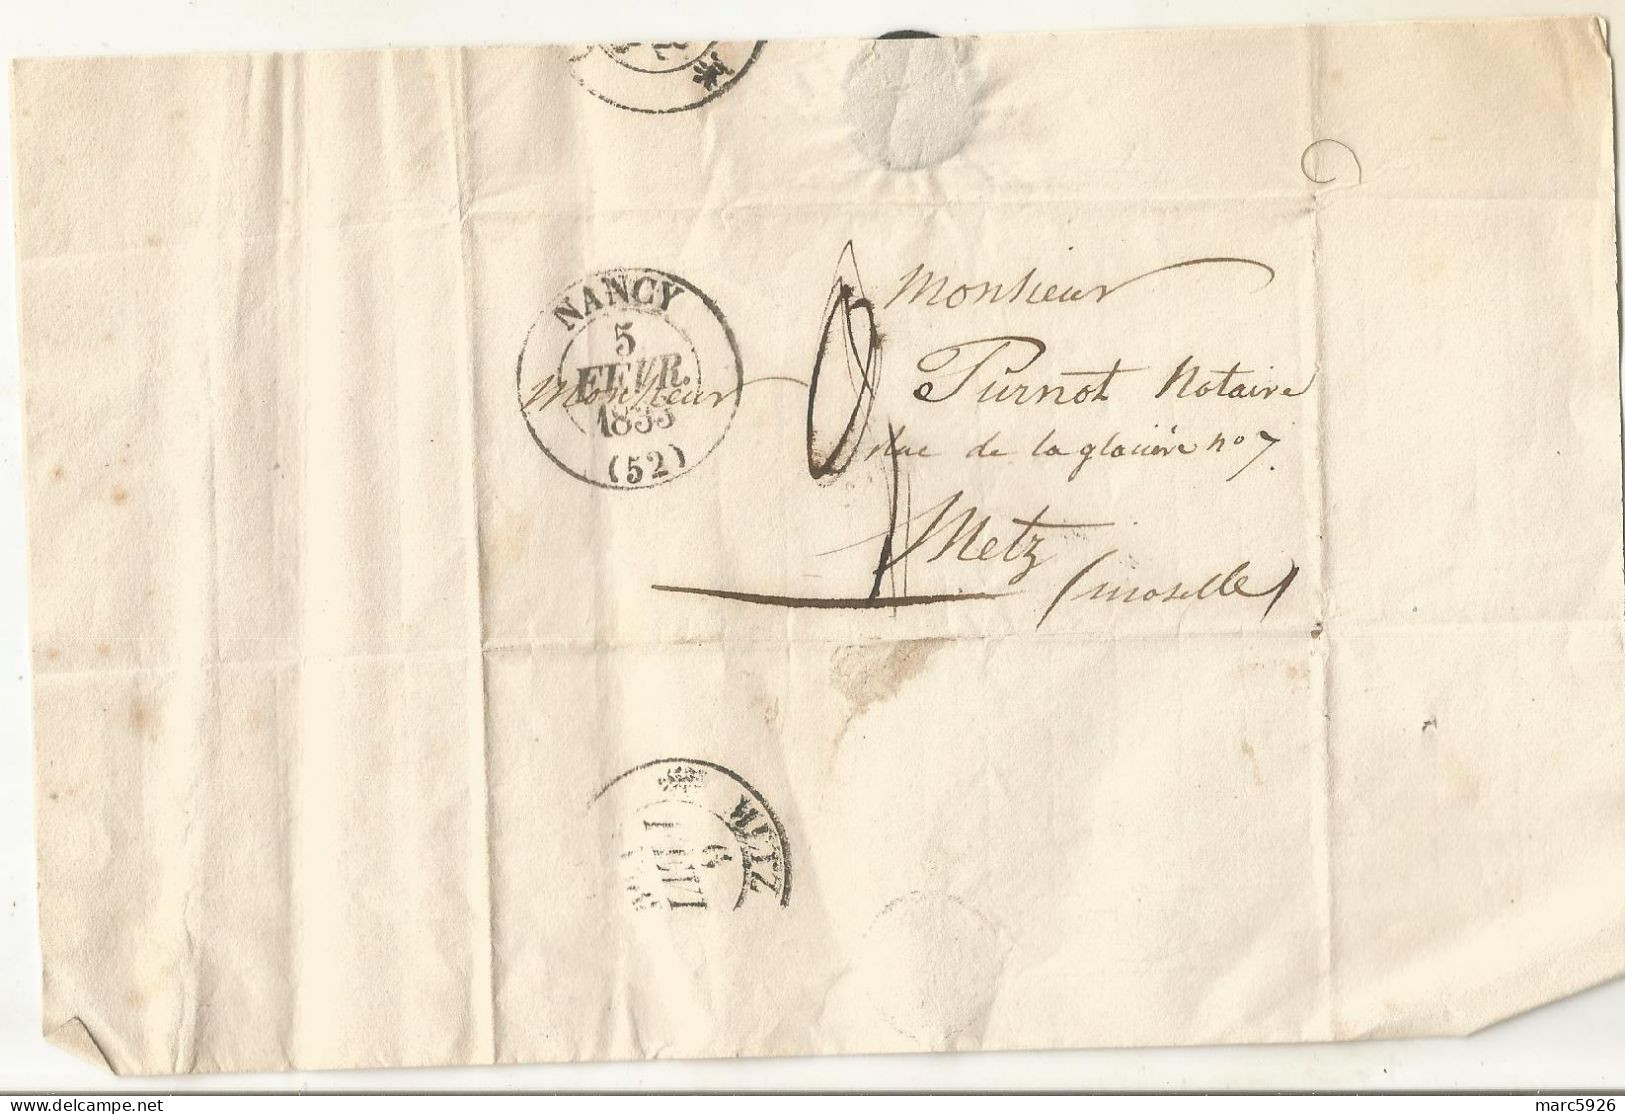 N°1978 ANCIENNE LETTRE DE CHARLES D'HAUSEN A M PURNOT DATE 1833 - Historical Documents